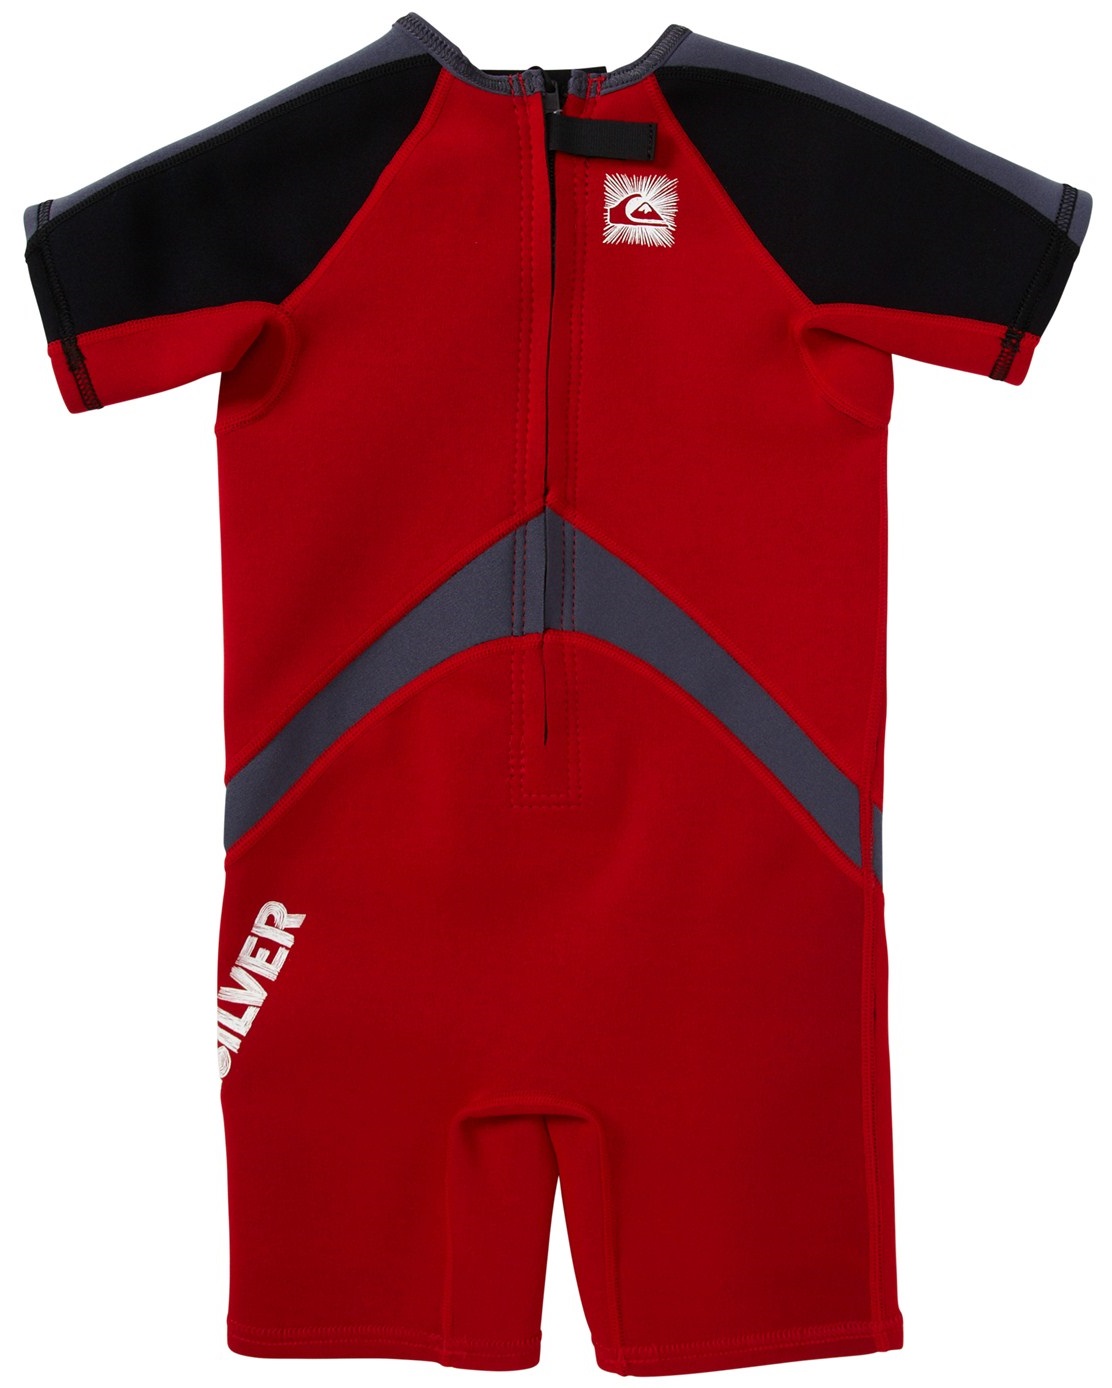 Syncro Black Quiksilver Springsuit Wetsuit - 1.5mm Red Toddler Boys